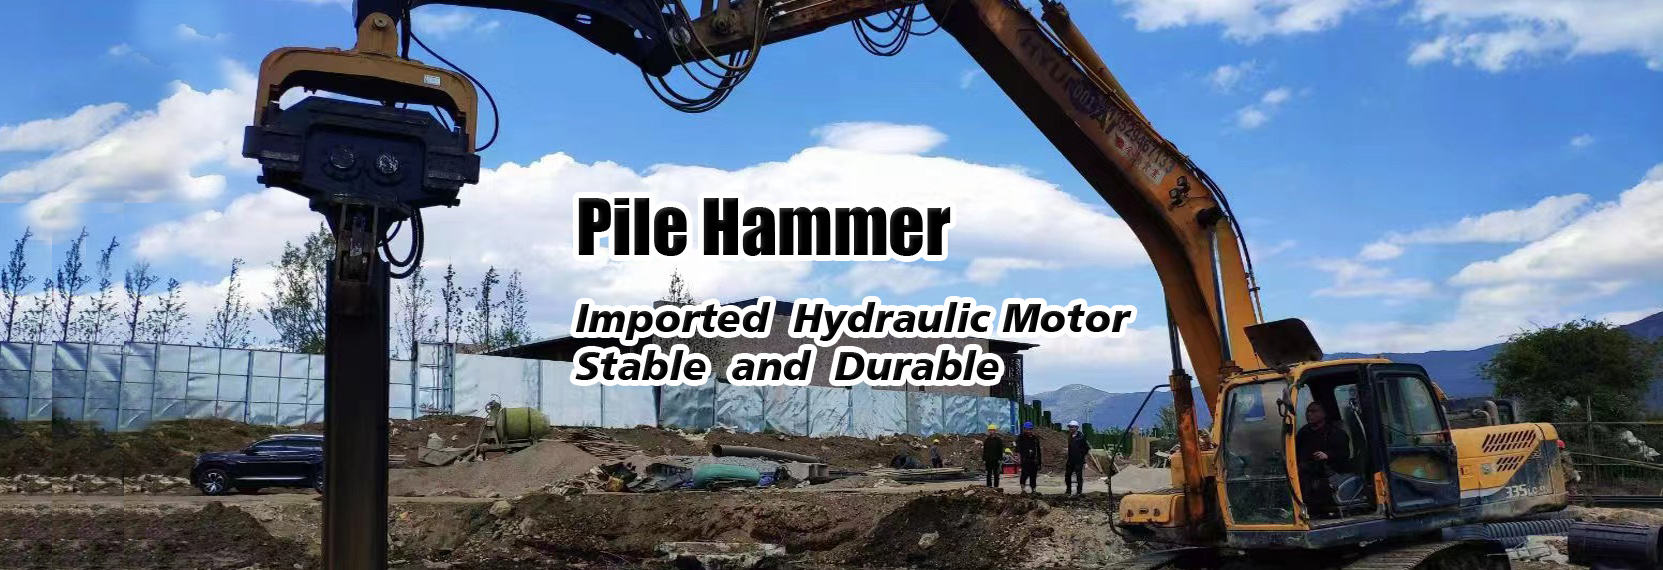 Pile Hammer